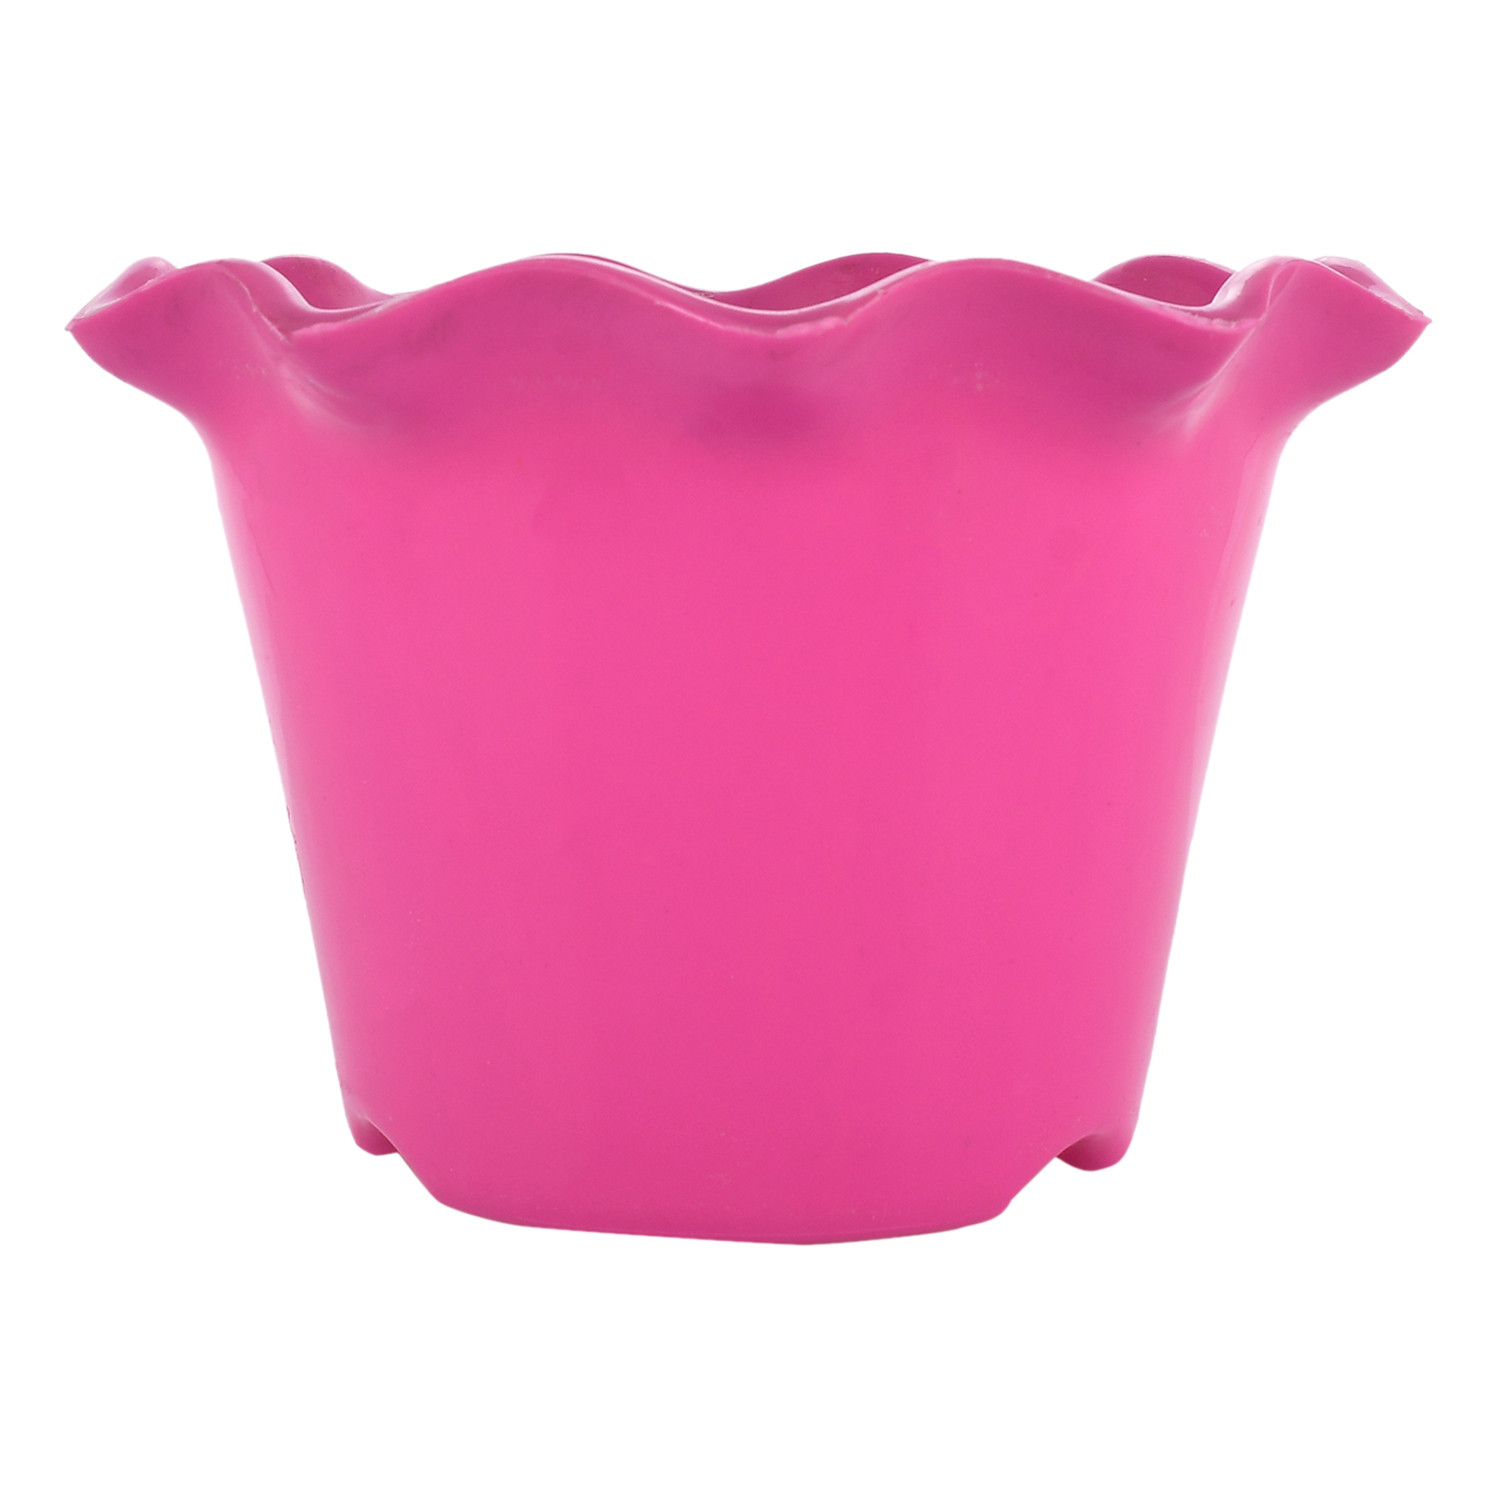 Kuber Industries Blossom Flower Pot|Durable Plastic Flower Pots|Planters for Home Décor|Garden|Living Room|Balcony|Pack of 2 (Pink & Orange)